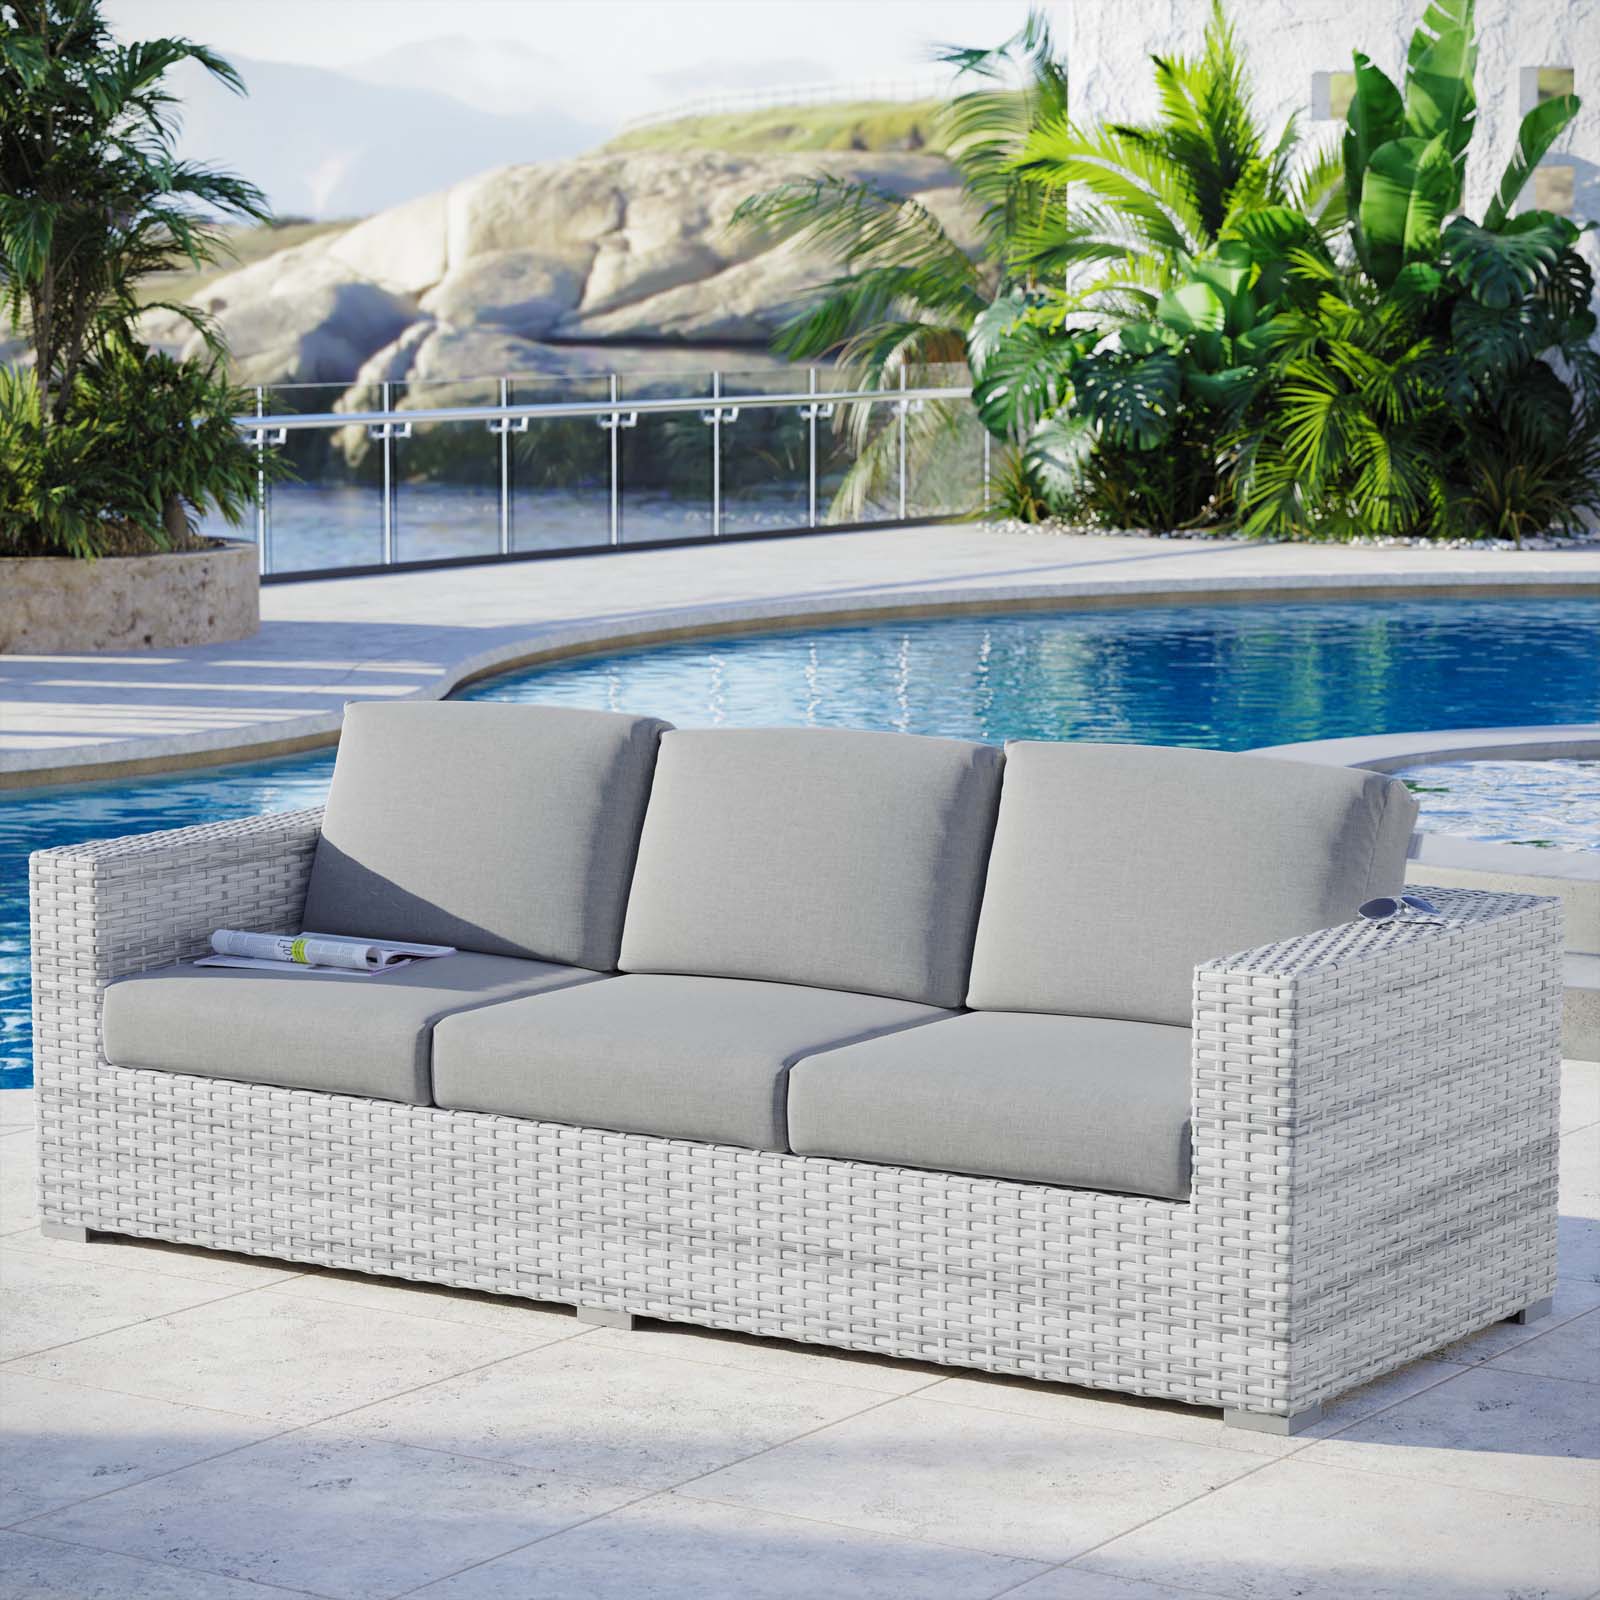 Convene Outdoor Patio Sofa - East Shore Modern Home Furnishings